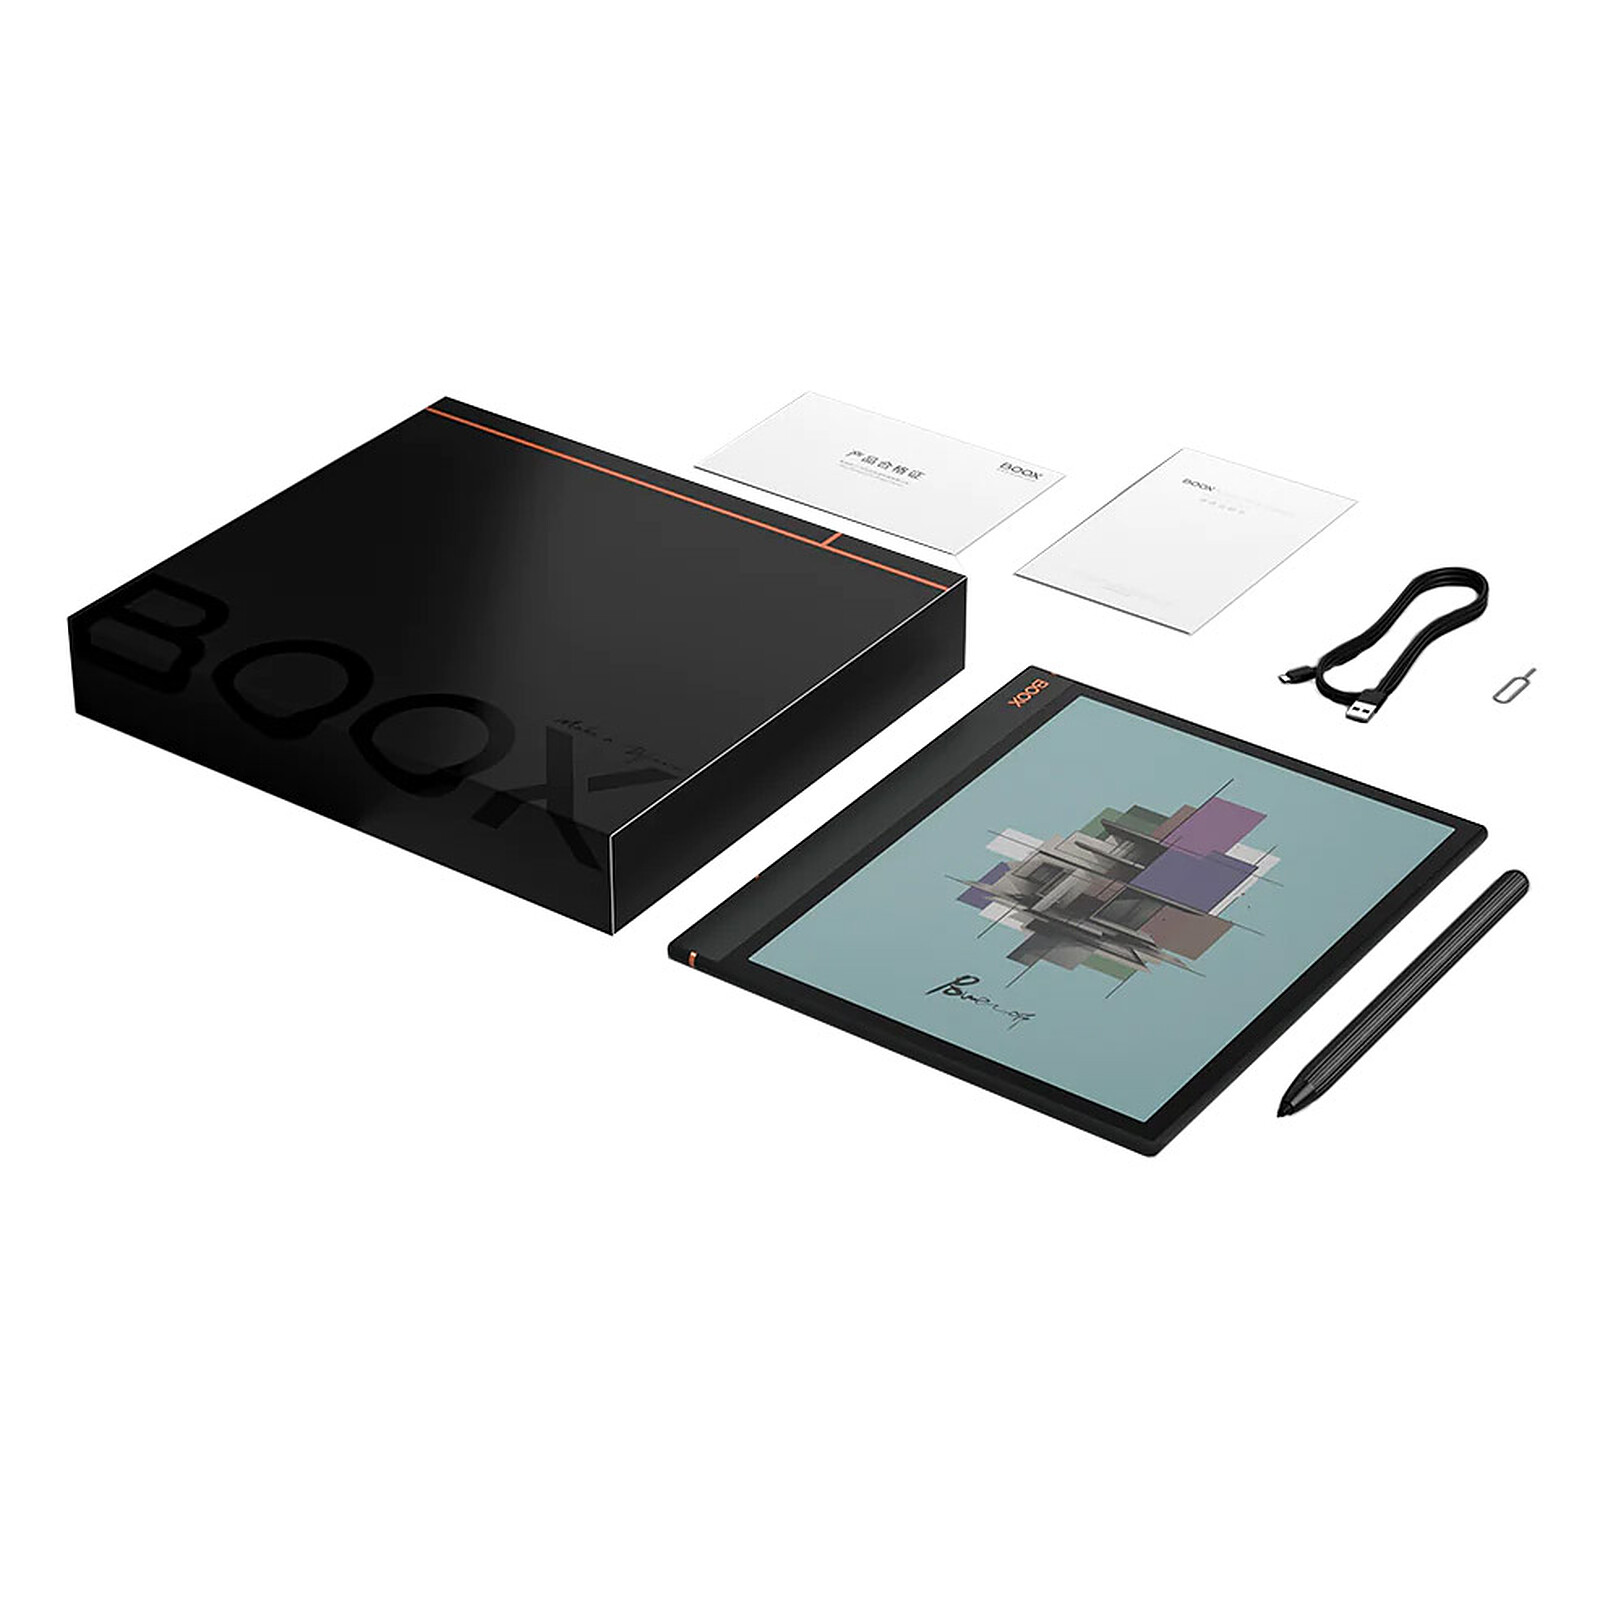 VIVLIO InkPad 3 Digital E-Book Reader + Pack of More Than 8 Ebooks